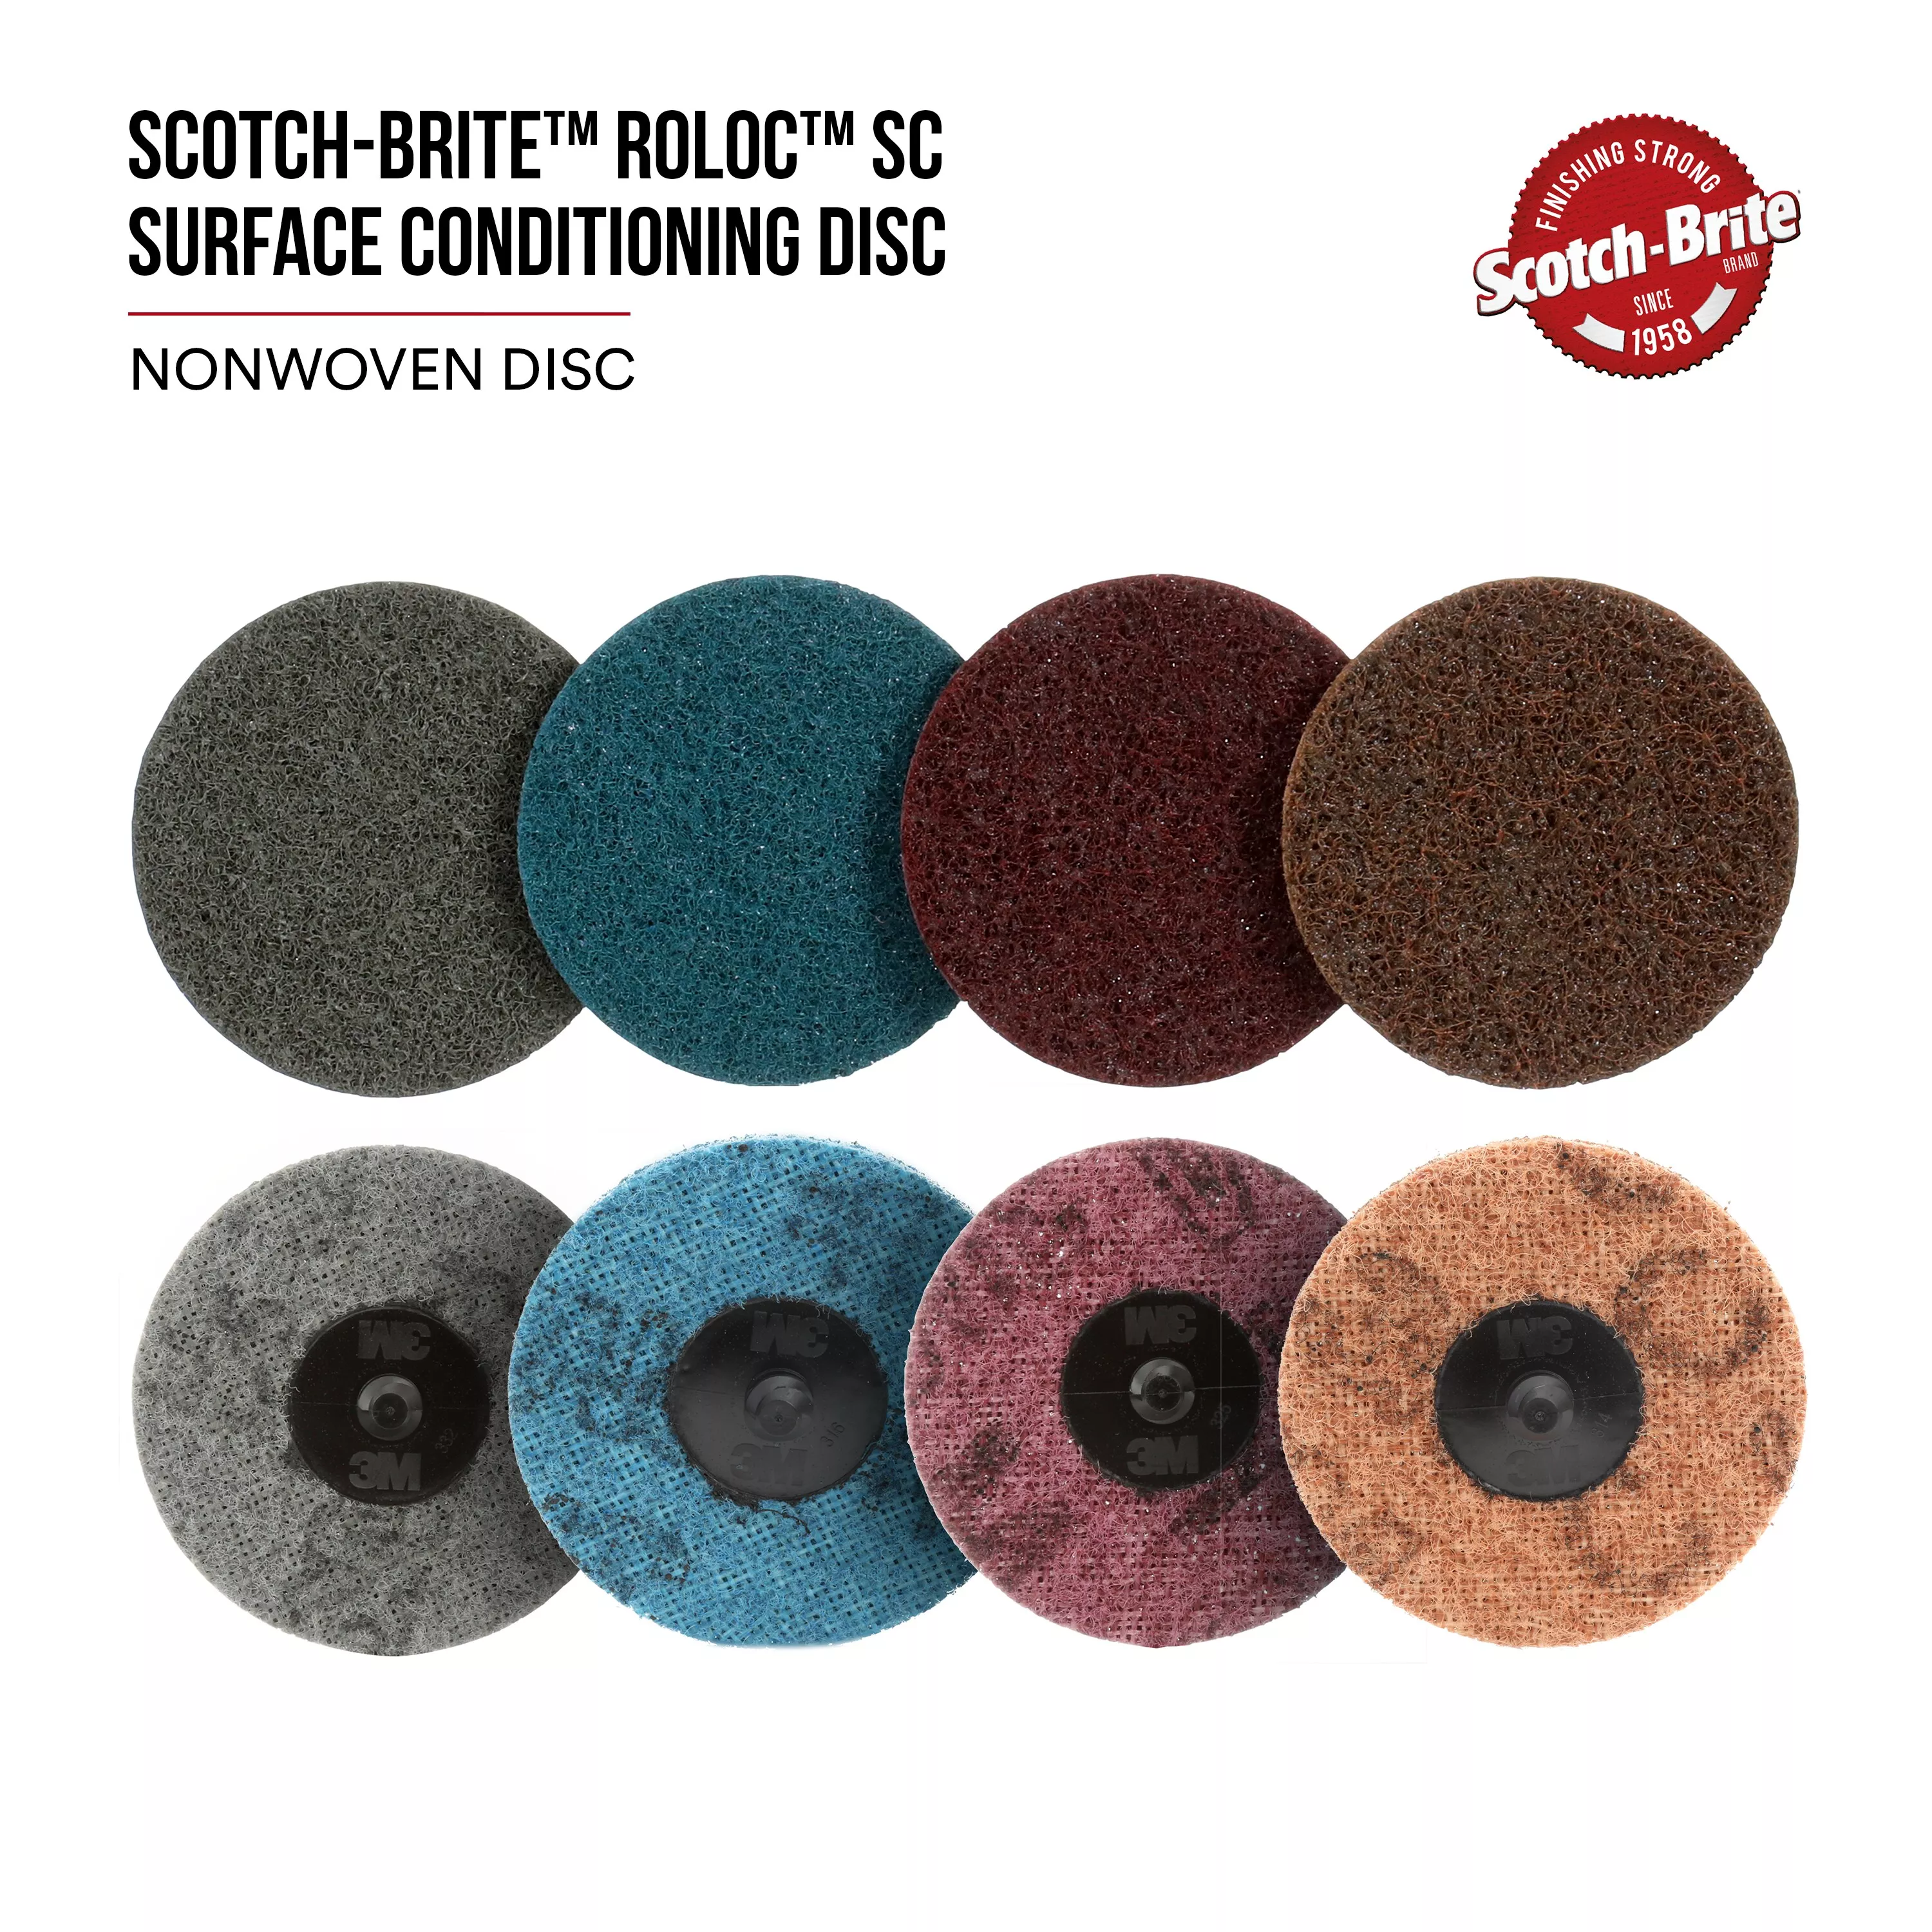 SKU 7000120595 | Scotch-Brite™ Roloc™ Surface Conditioning Disc